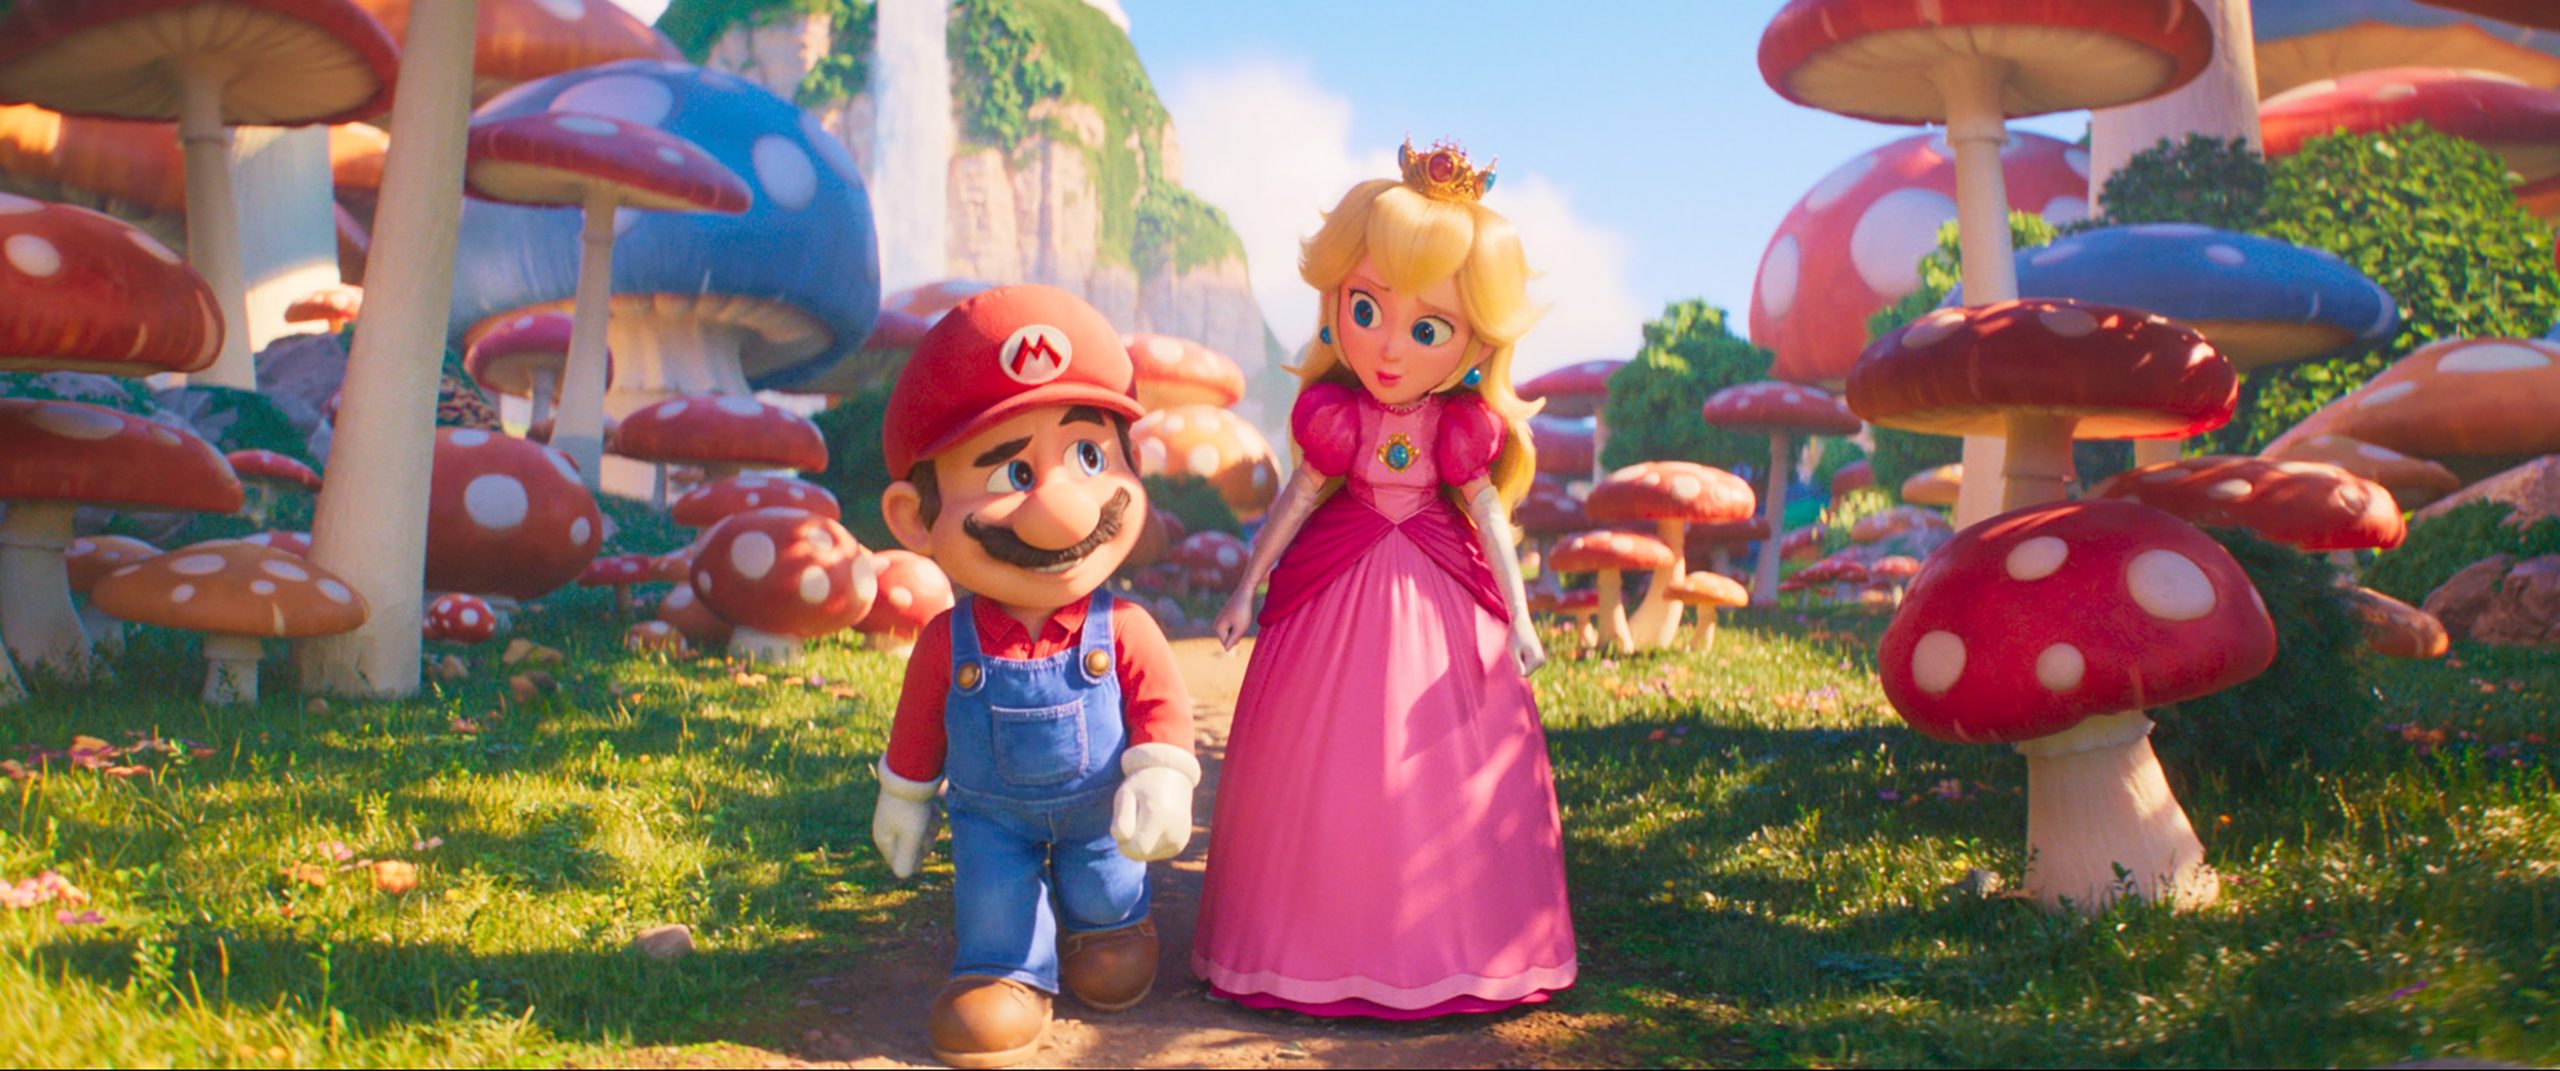 Música “Peaches”, do filme do Mario, entra no Top 100 da Billboard